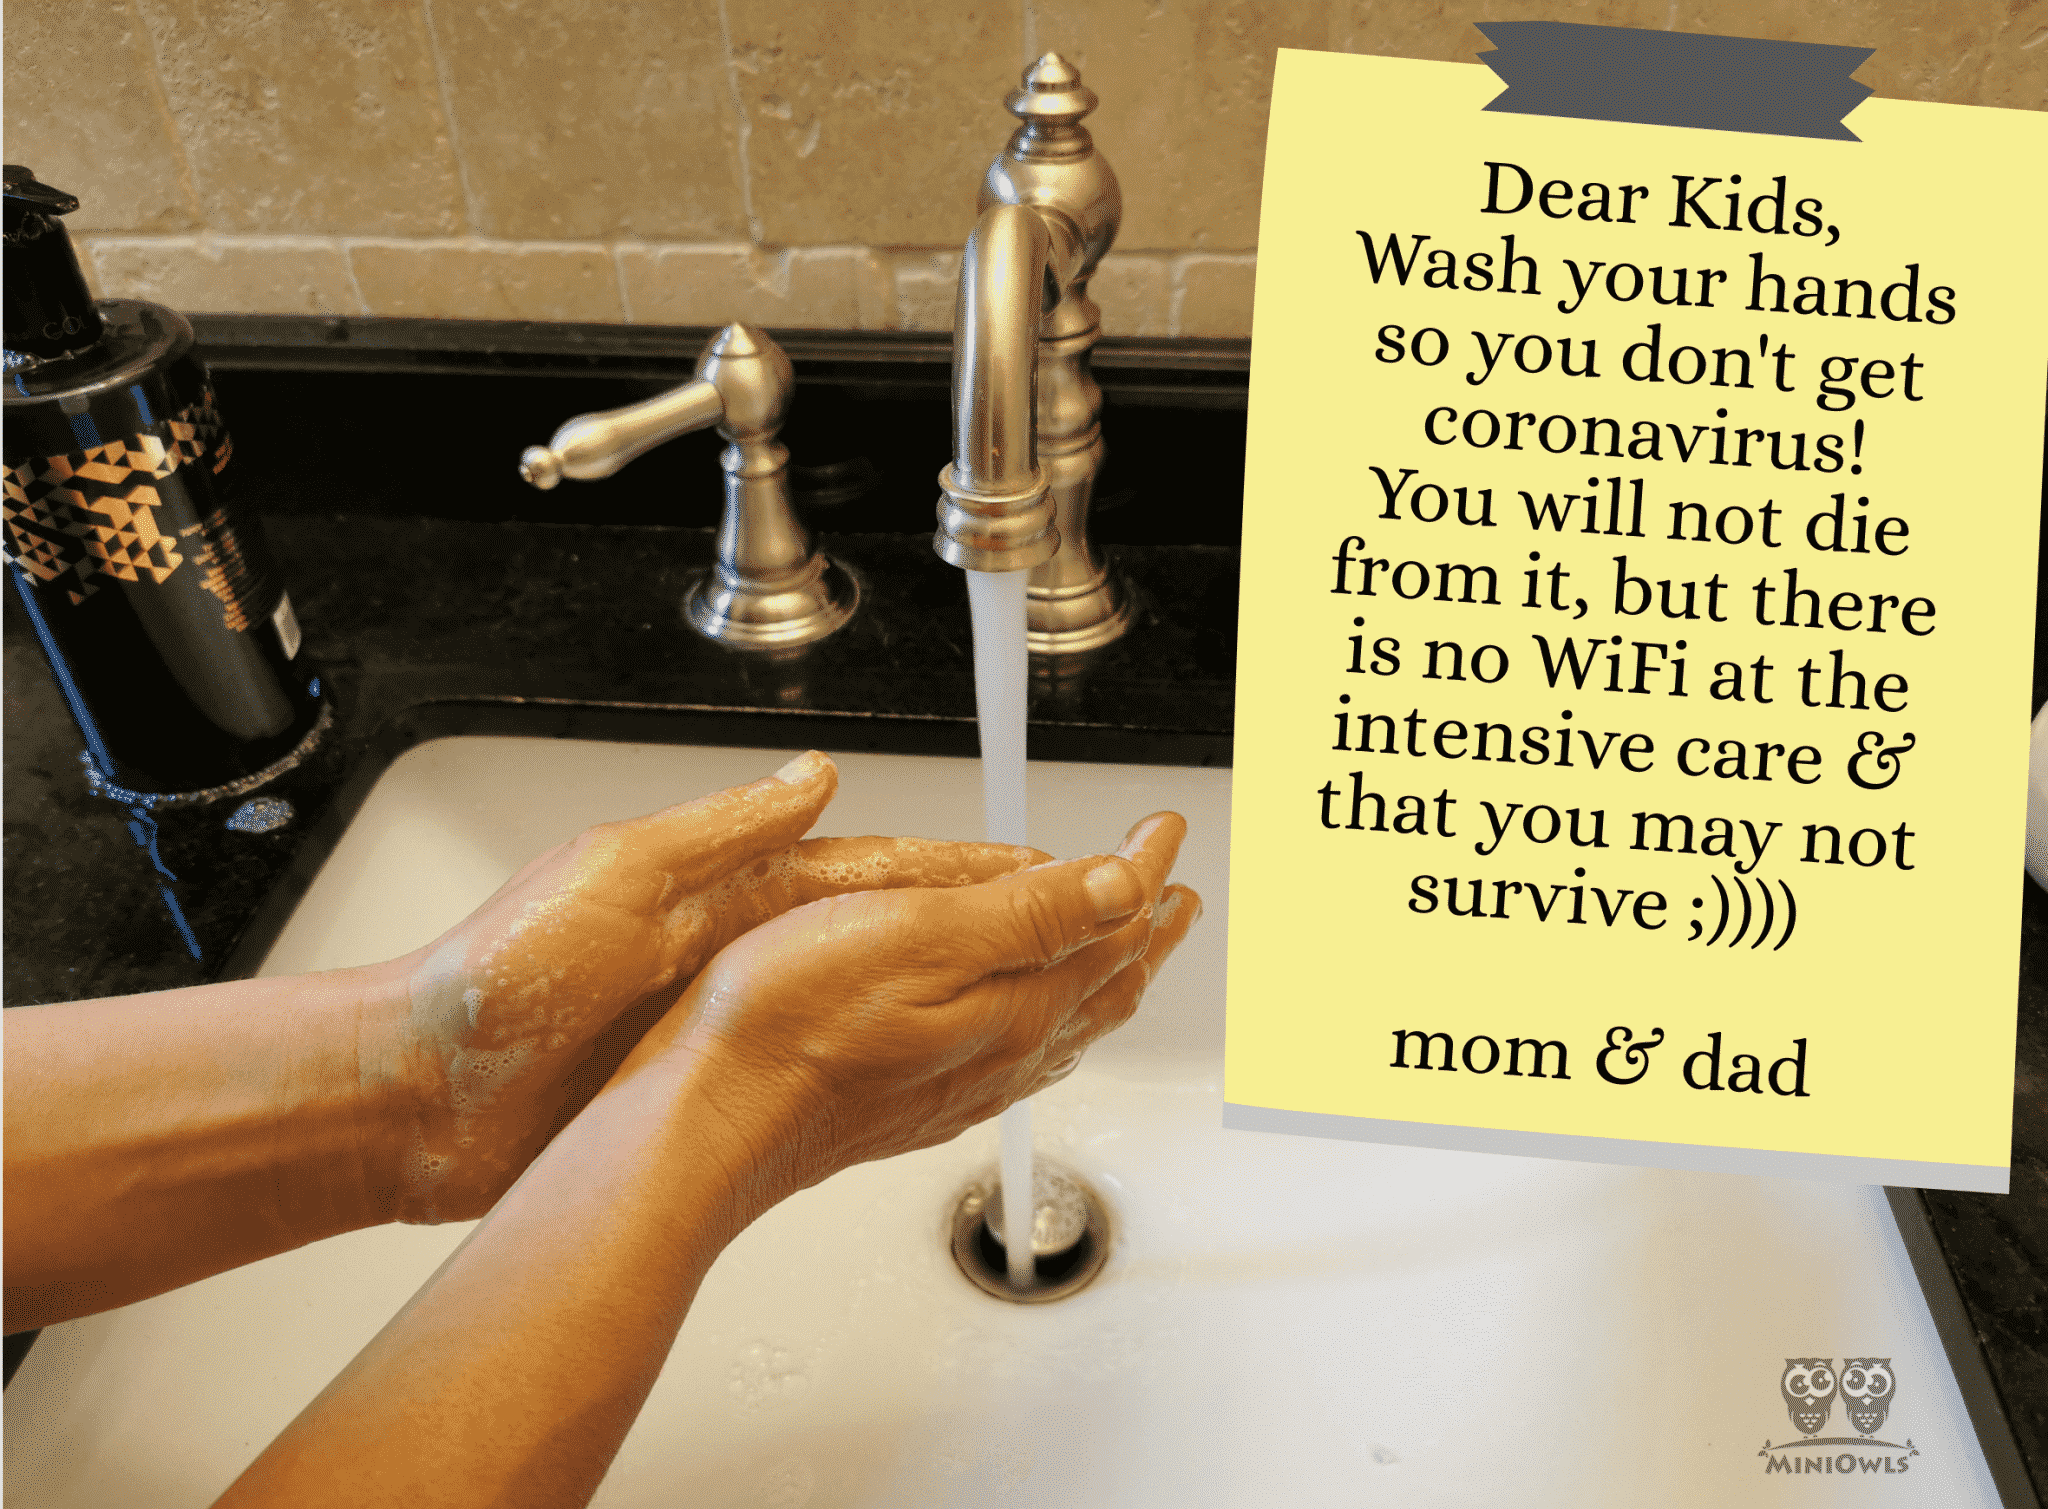 stay healthy, wash hands to beat corona virus